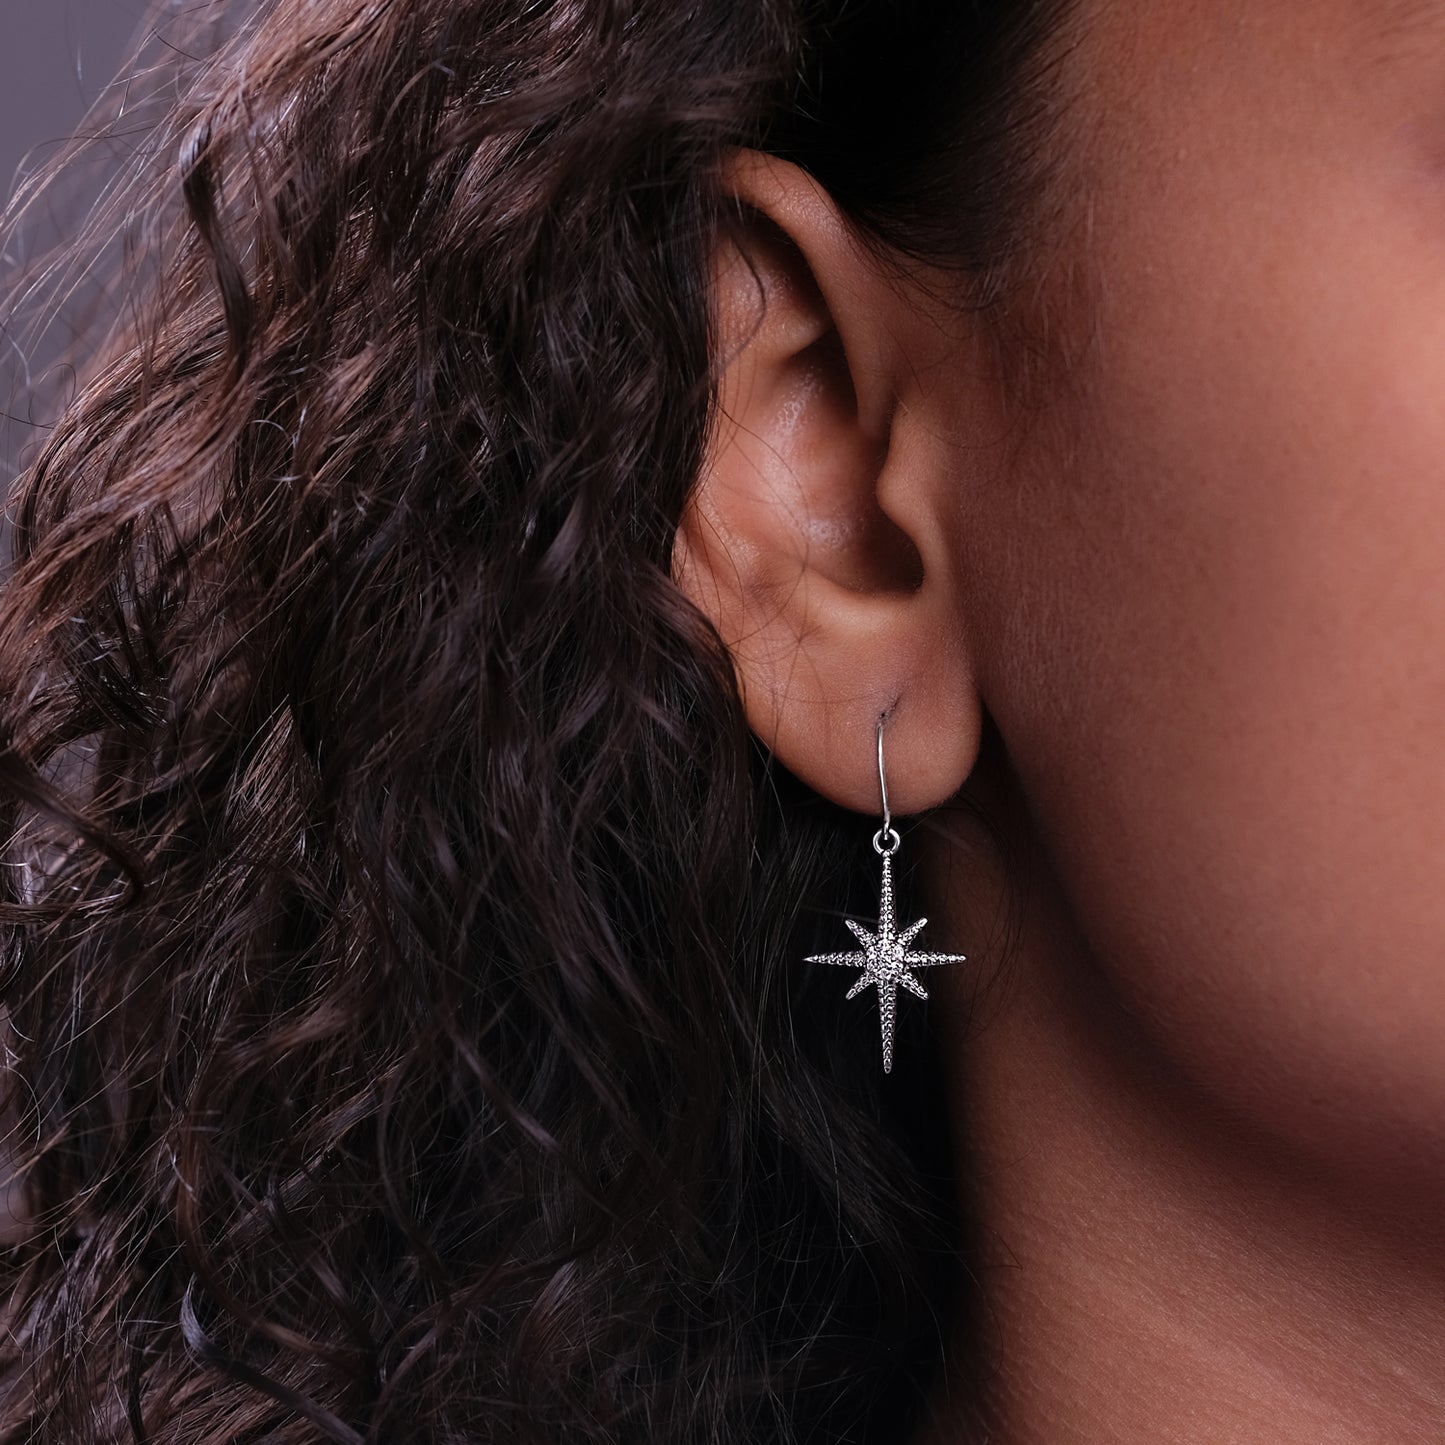 925 Sterling Silver Asteric Star Diamond Drop Earrings